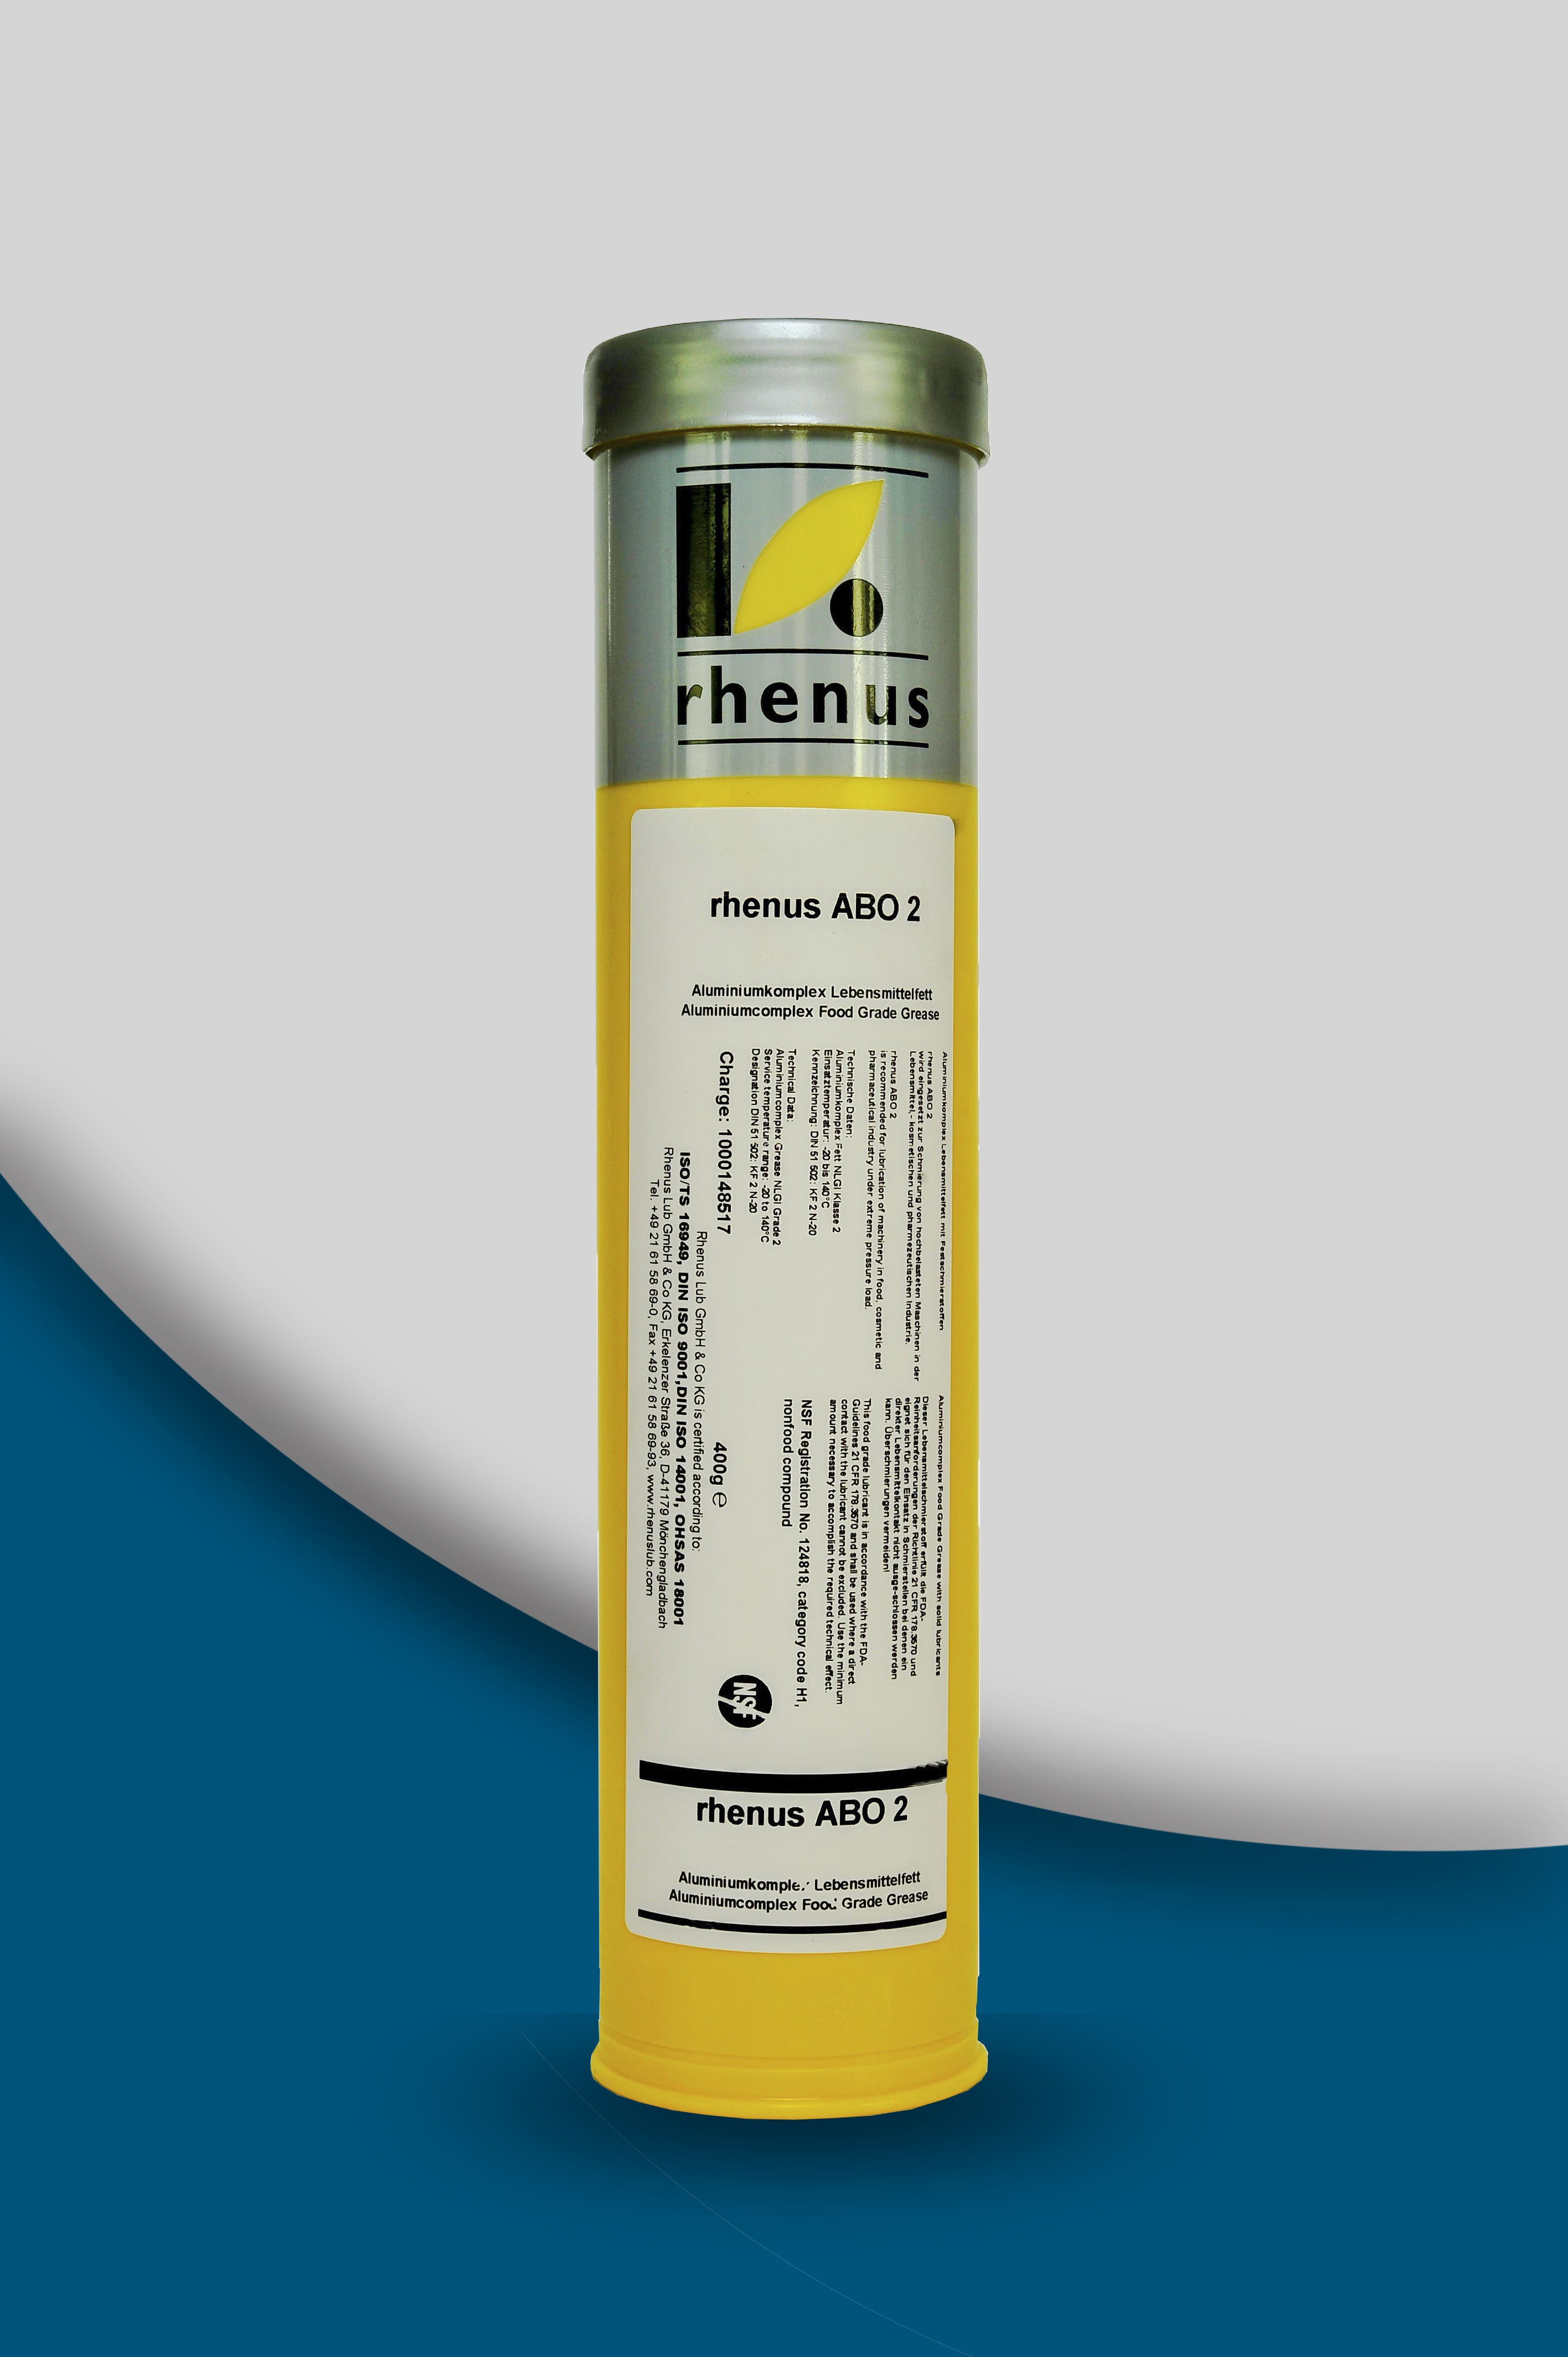 rhenus ABO 2 食品級 含聚四氟乙烯PTFE耐極壓潤滑脂(食品級潤滑油)